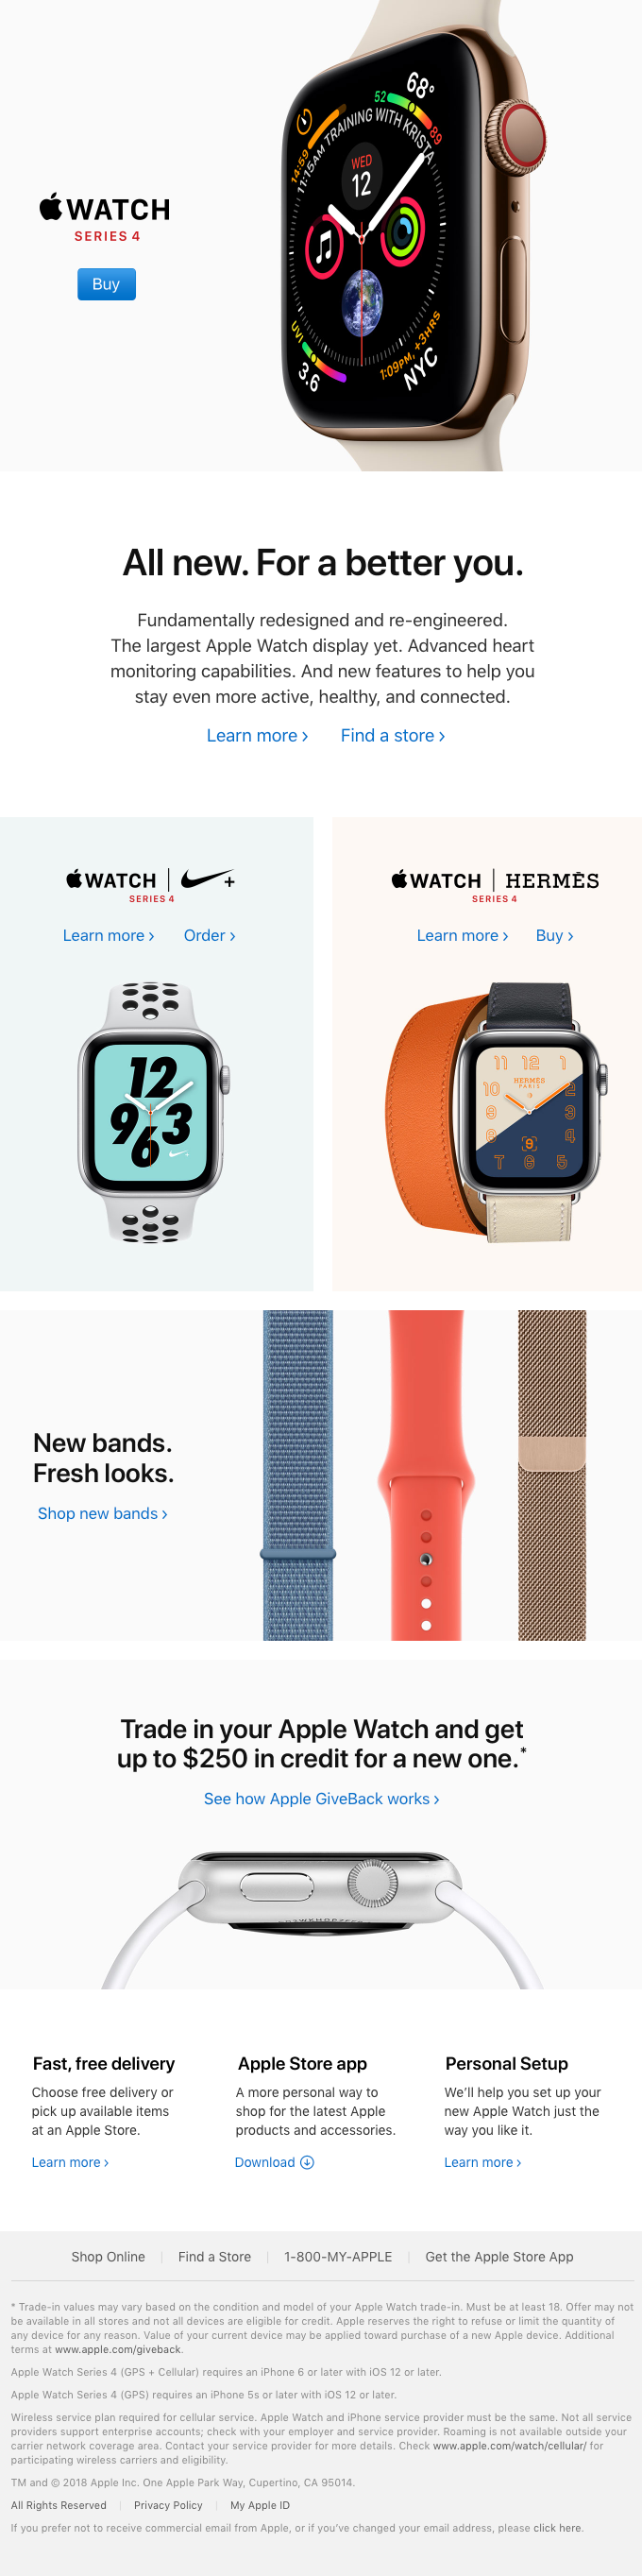 Apple Watch Series 4 is here.